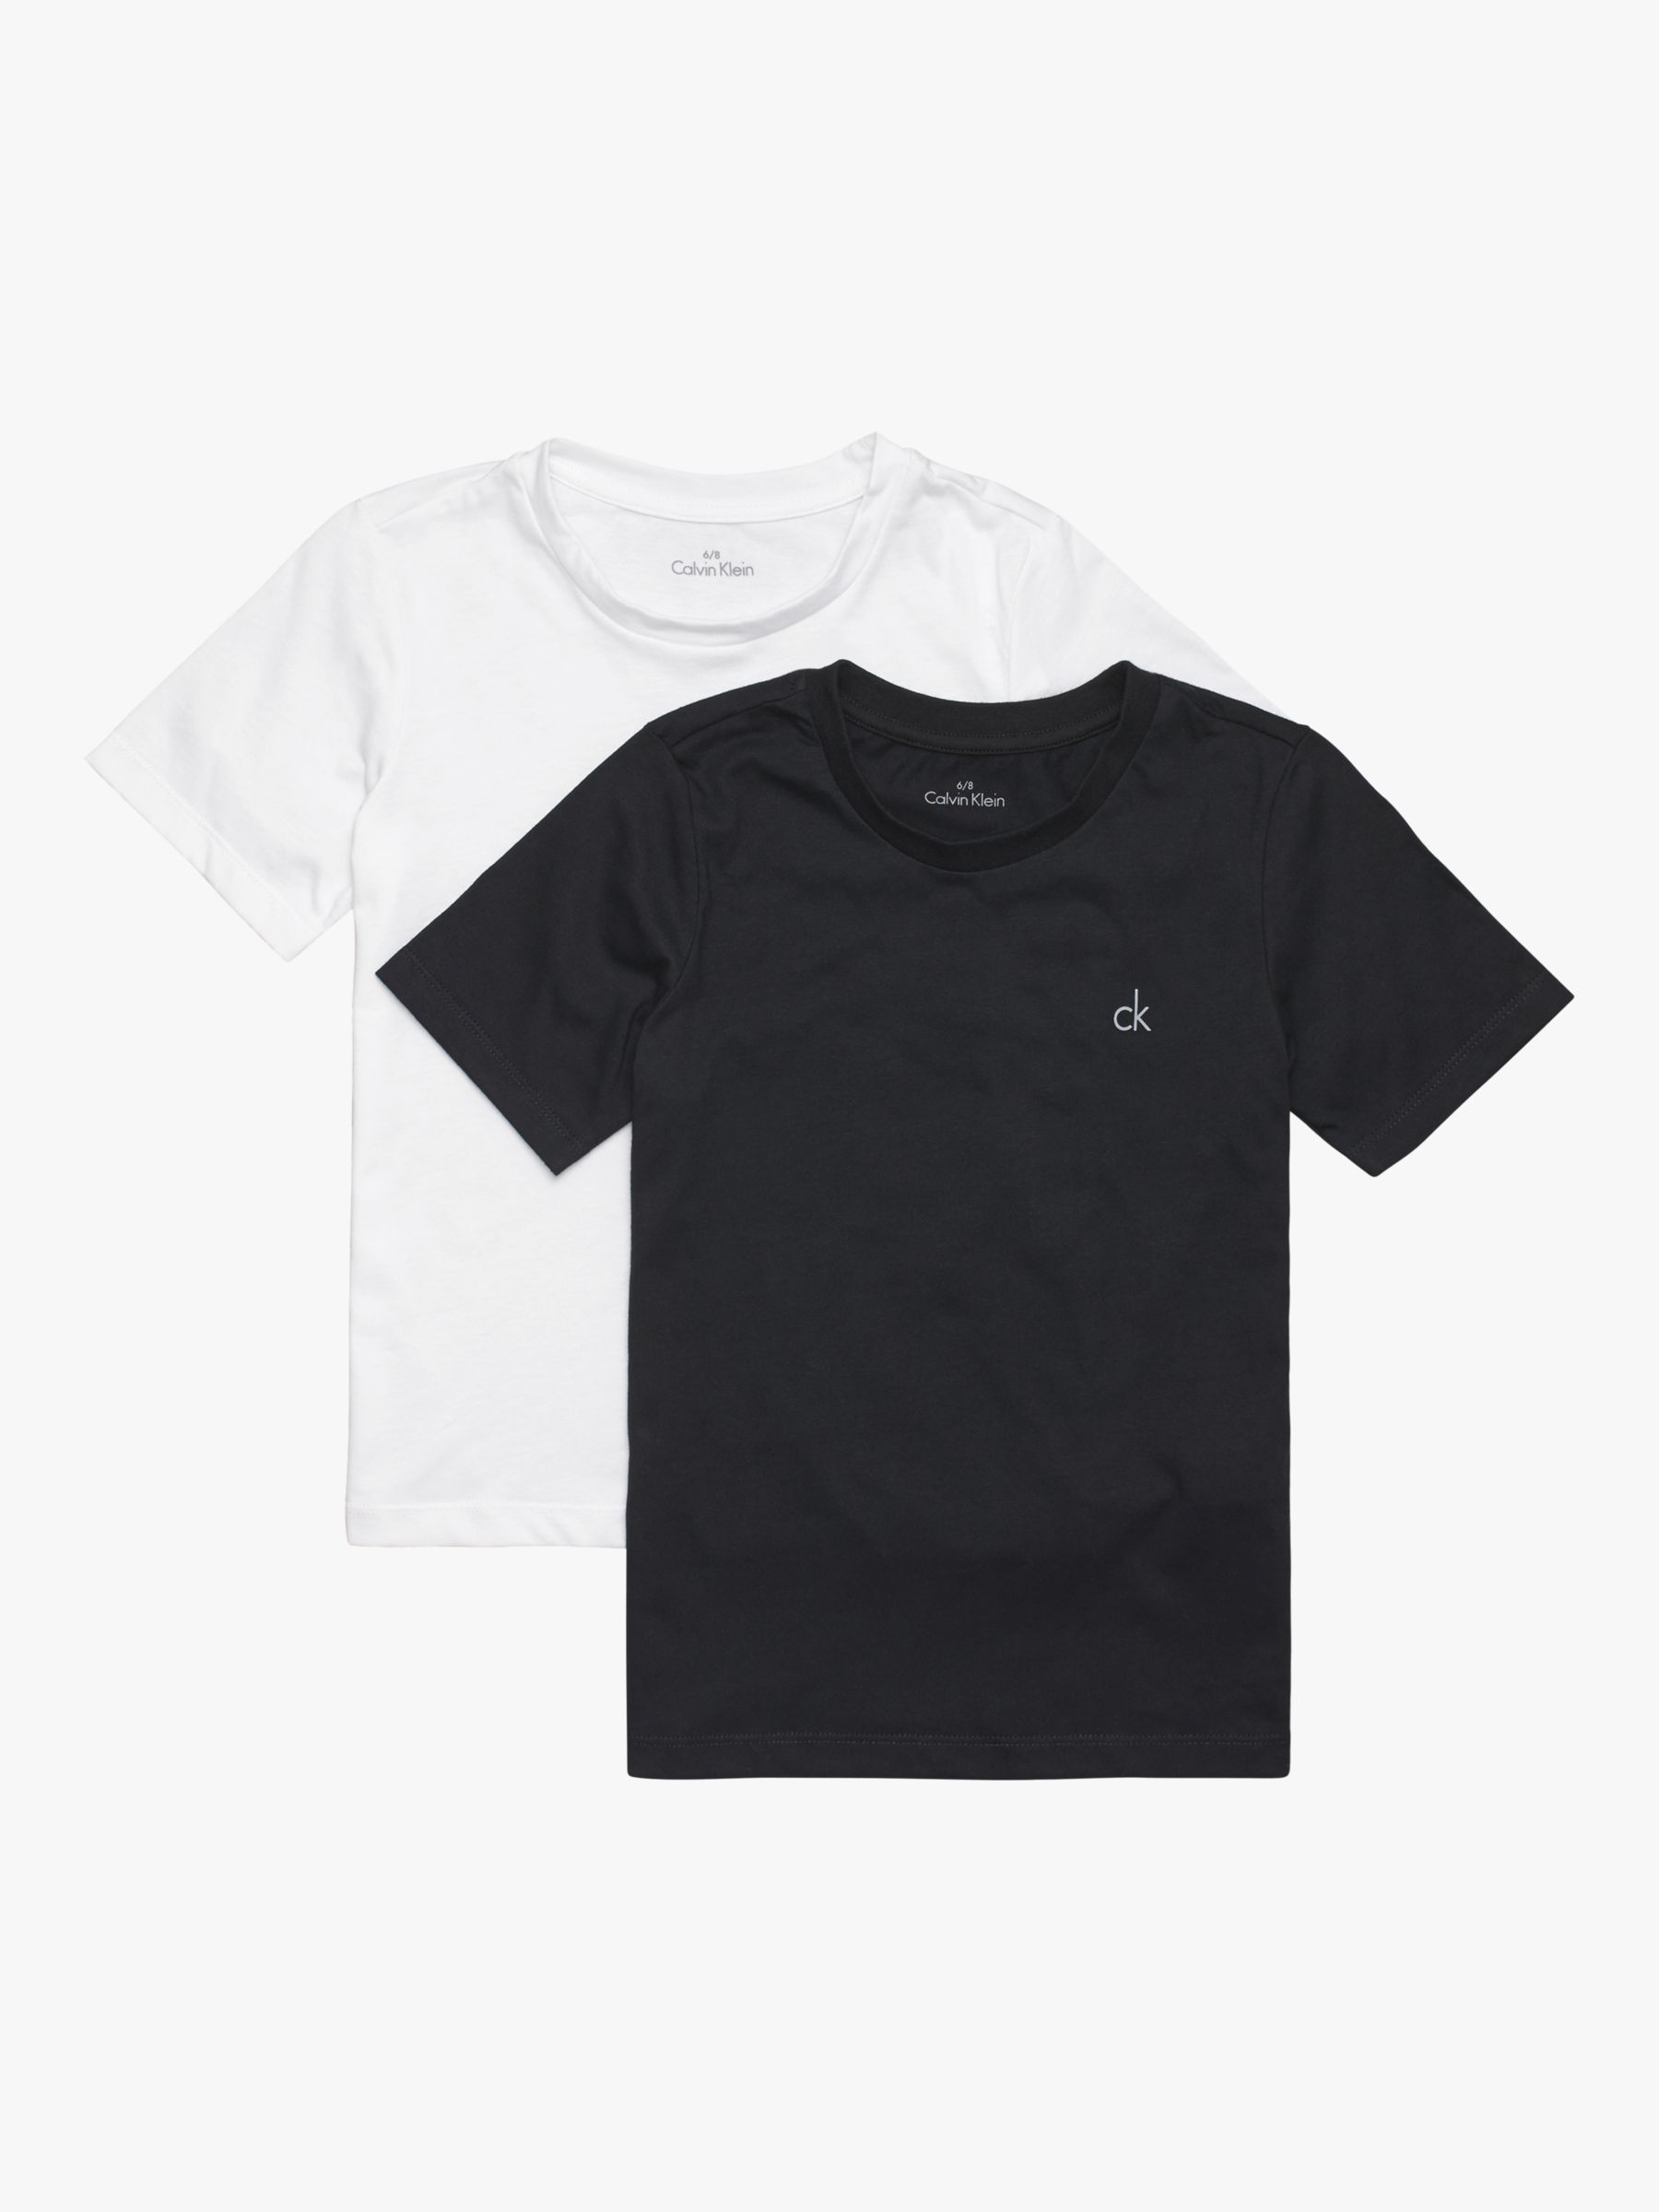 Calvin Klein Kids' Short Sleeve T-Shirts, Pack of 2, White/Black, 8-10 years